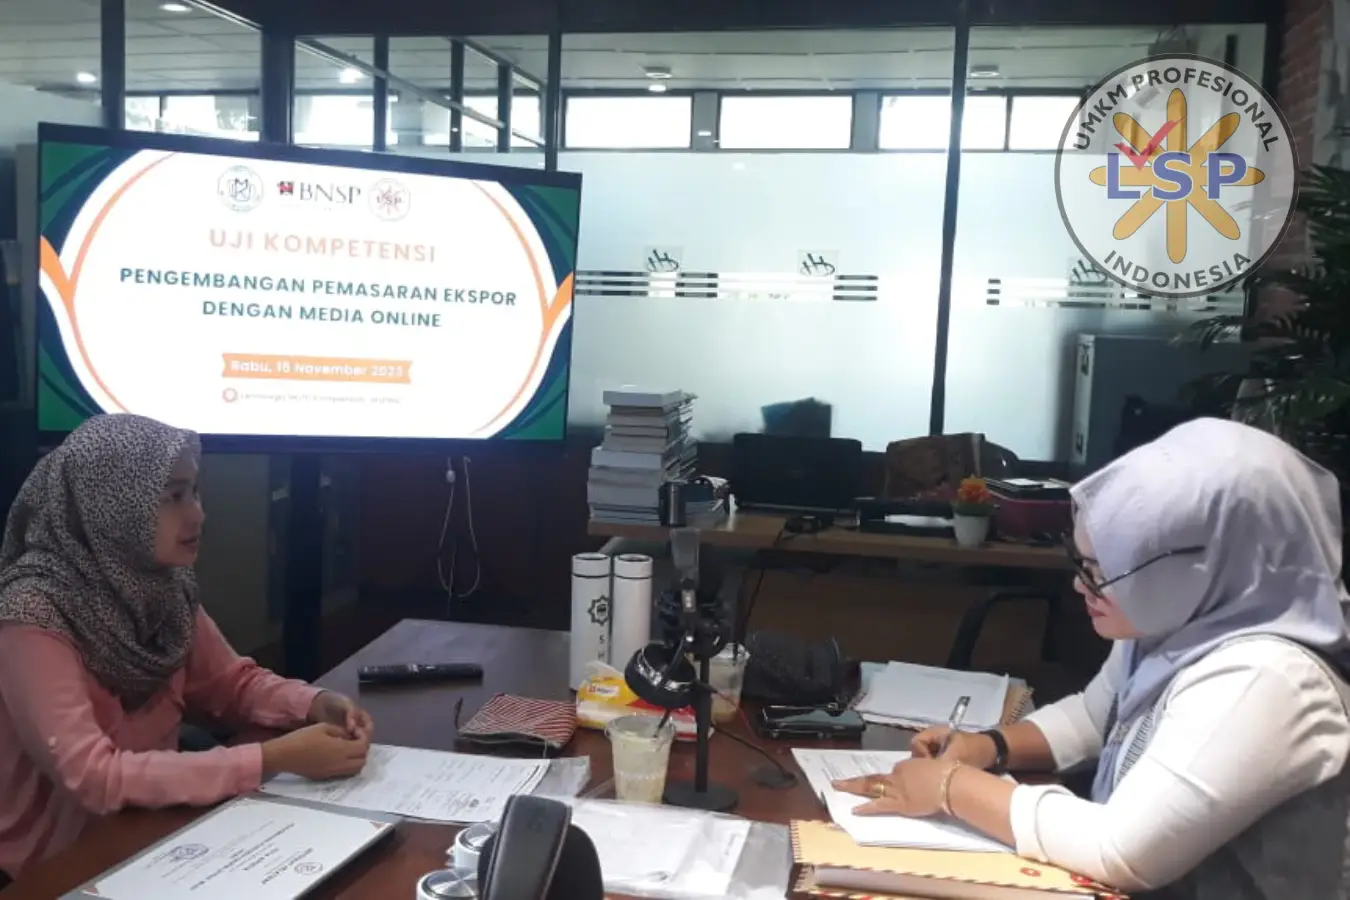 Pelaksanaan Uji Kompetensi dengan skema Pengembangan Ekspor Melalui Media Online 15 November 2023 Universitas Sumatera Utara